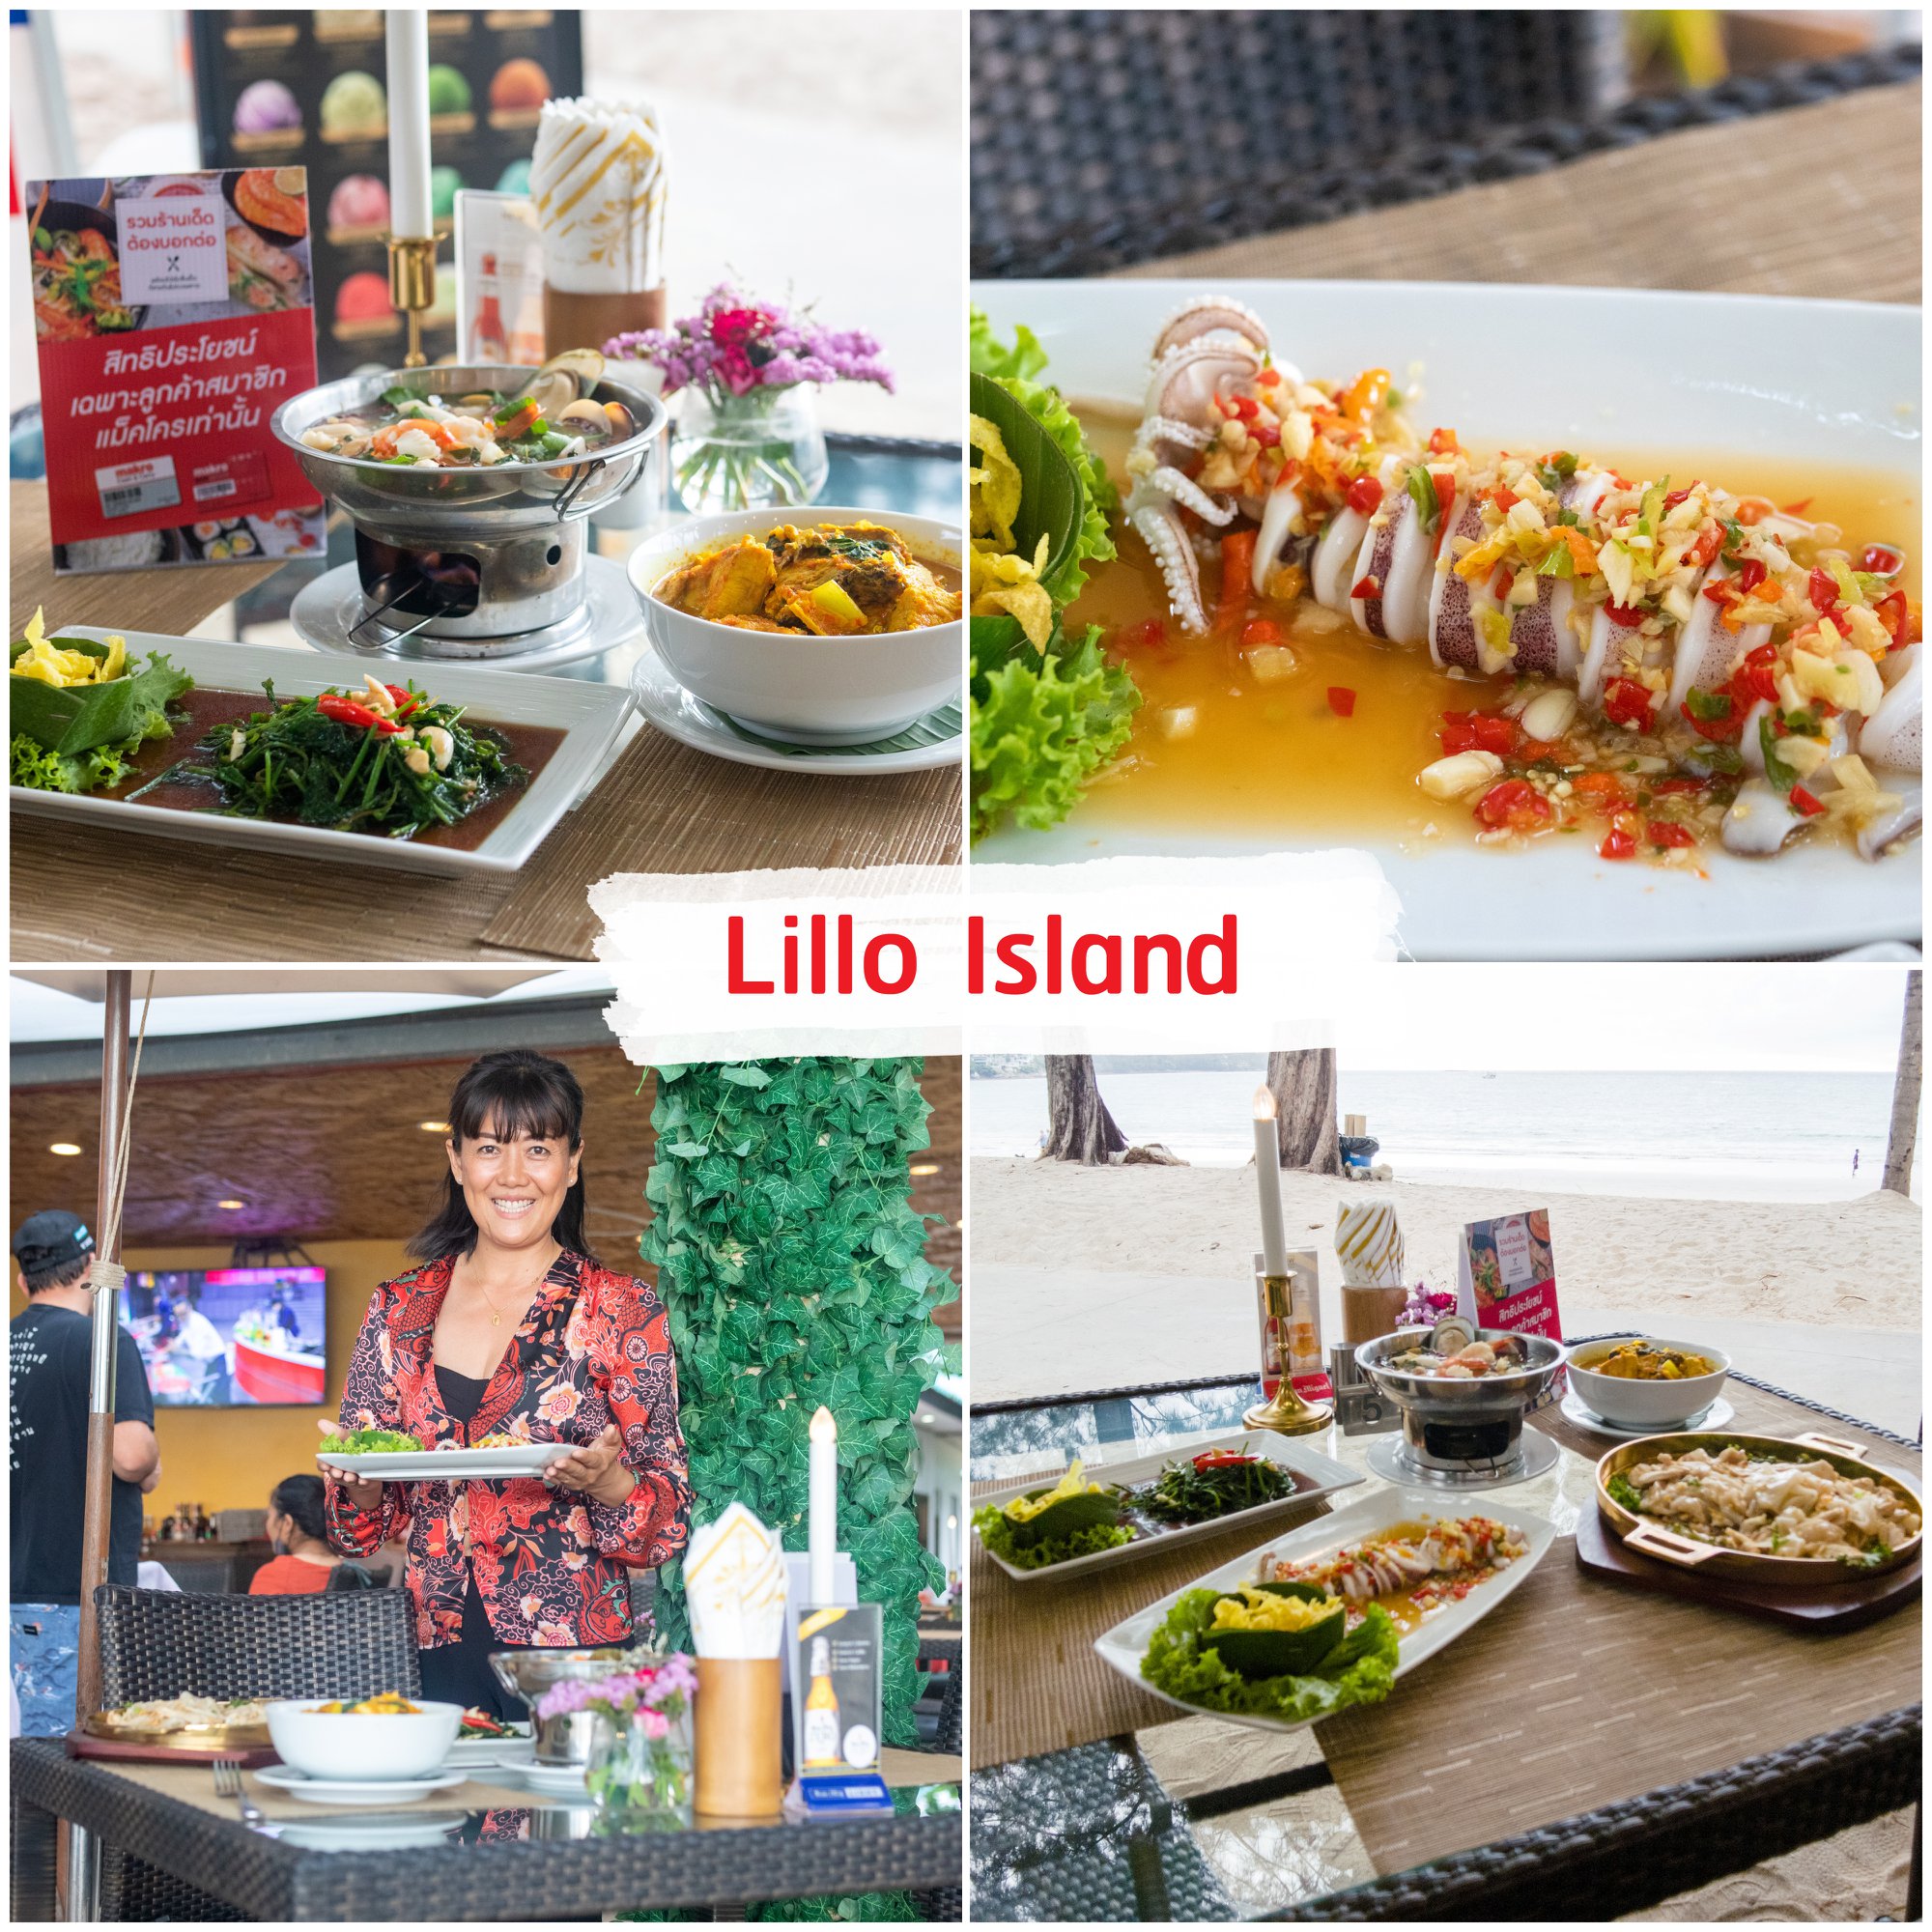 Lillo-Island -ร้านสวยวิวทะเลชิวๆ-แถมทีเด็ดคืออาหารราคาไม่แพง-แถมอร่อยด้วยหอมๆเลย-บอกเลยว่าบรรยากาศสบายๆ-ริมหาด-แถมราคาเข้าถึงสำหรับคนไทยแบบนี้หายาก
เมนูแนะนำพวกหมึกนึ่งมะนาว-ต้มยำ-แกงส้มคืออร่อยหมด-บอกเลย-10/10-ต้องมาครับบ ภูเก็ต,ร้านอาหารภูเก็ต,ร้านอร่อยภูเก็ต